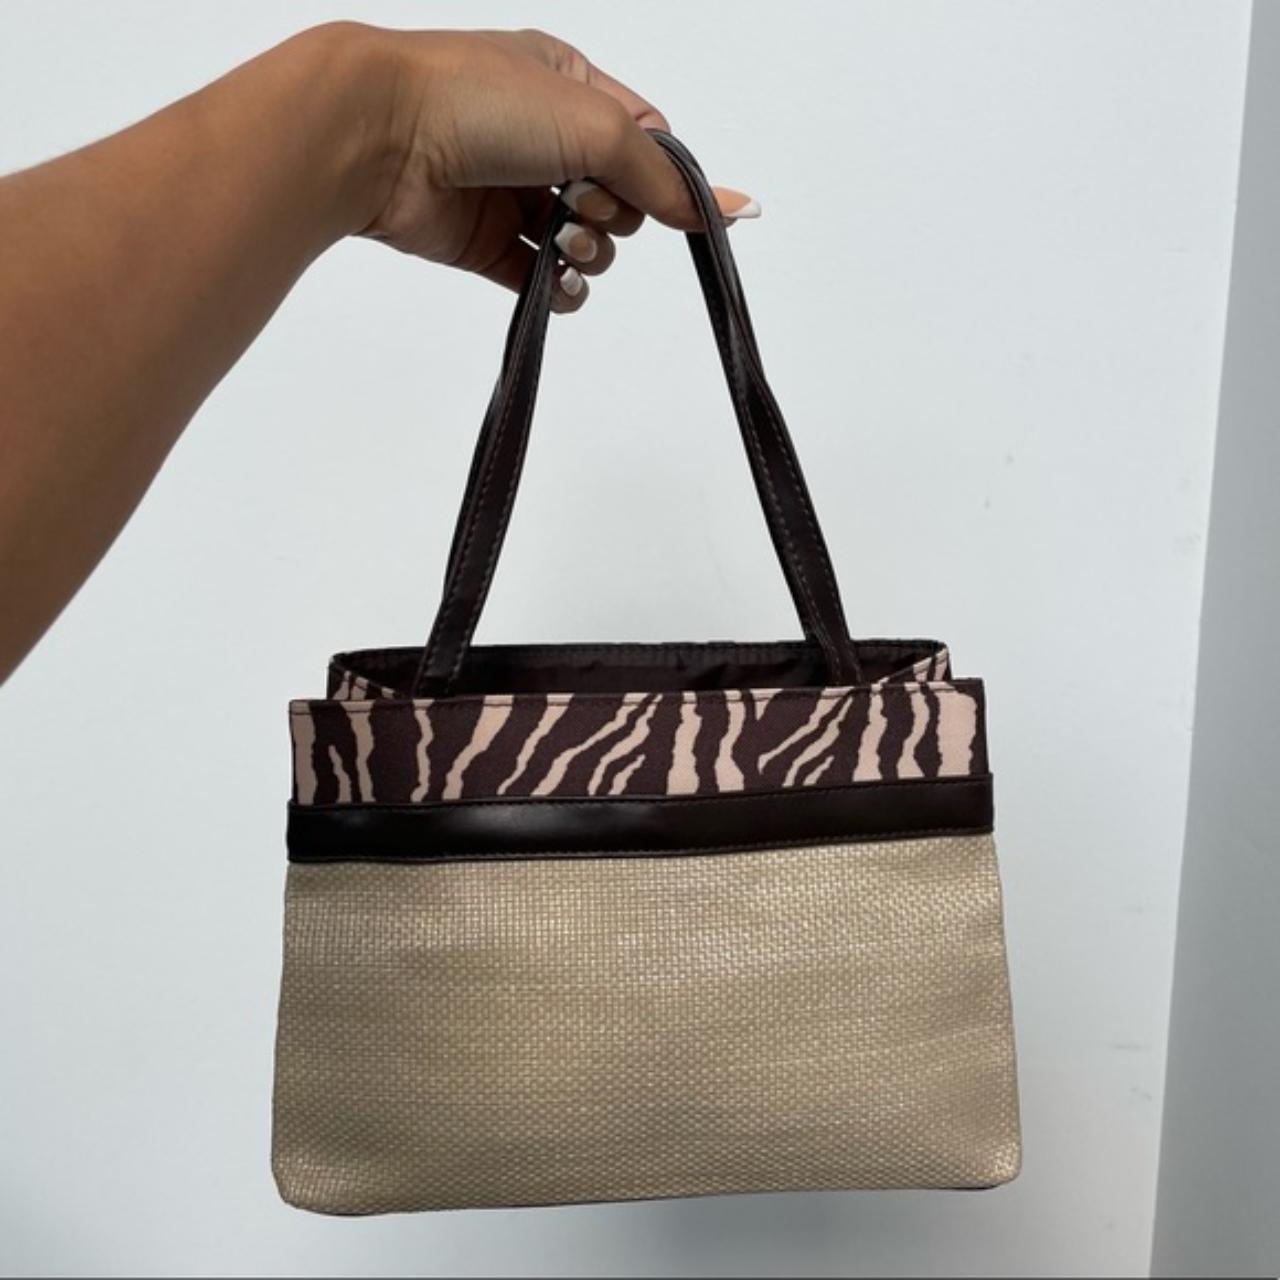 Product Image 2 - estee lauder
zebra print handbag, straw